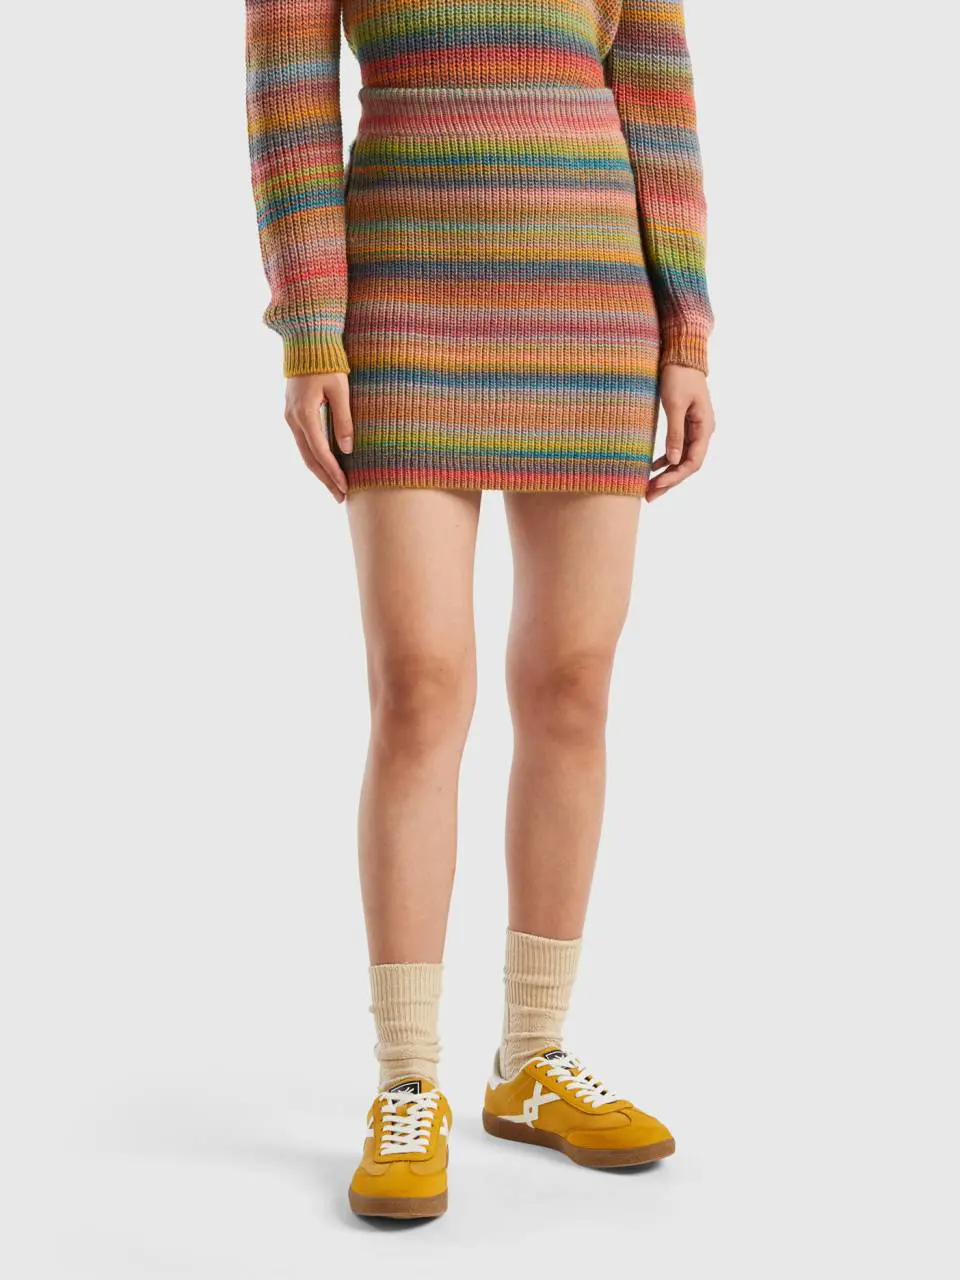 Benetton striped knit mini skirt. 1